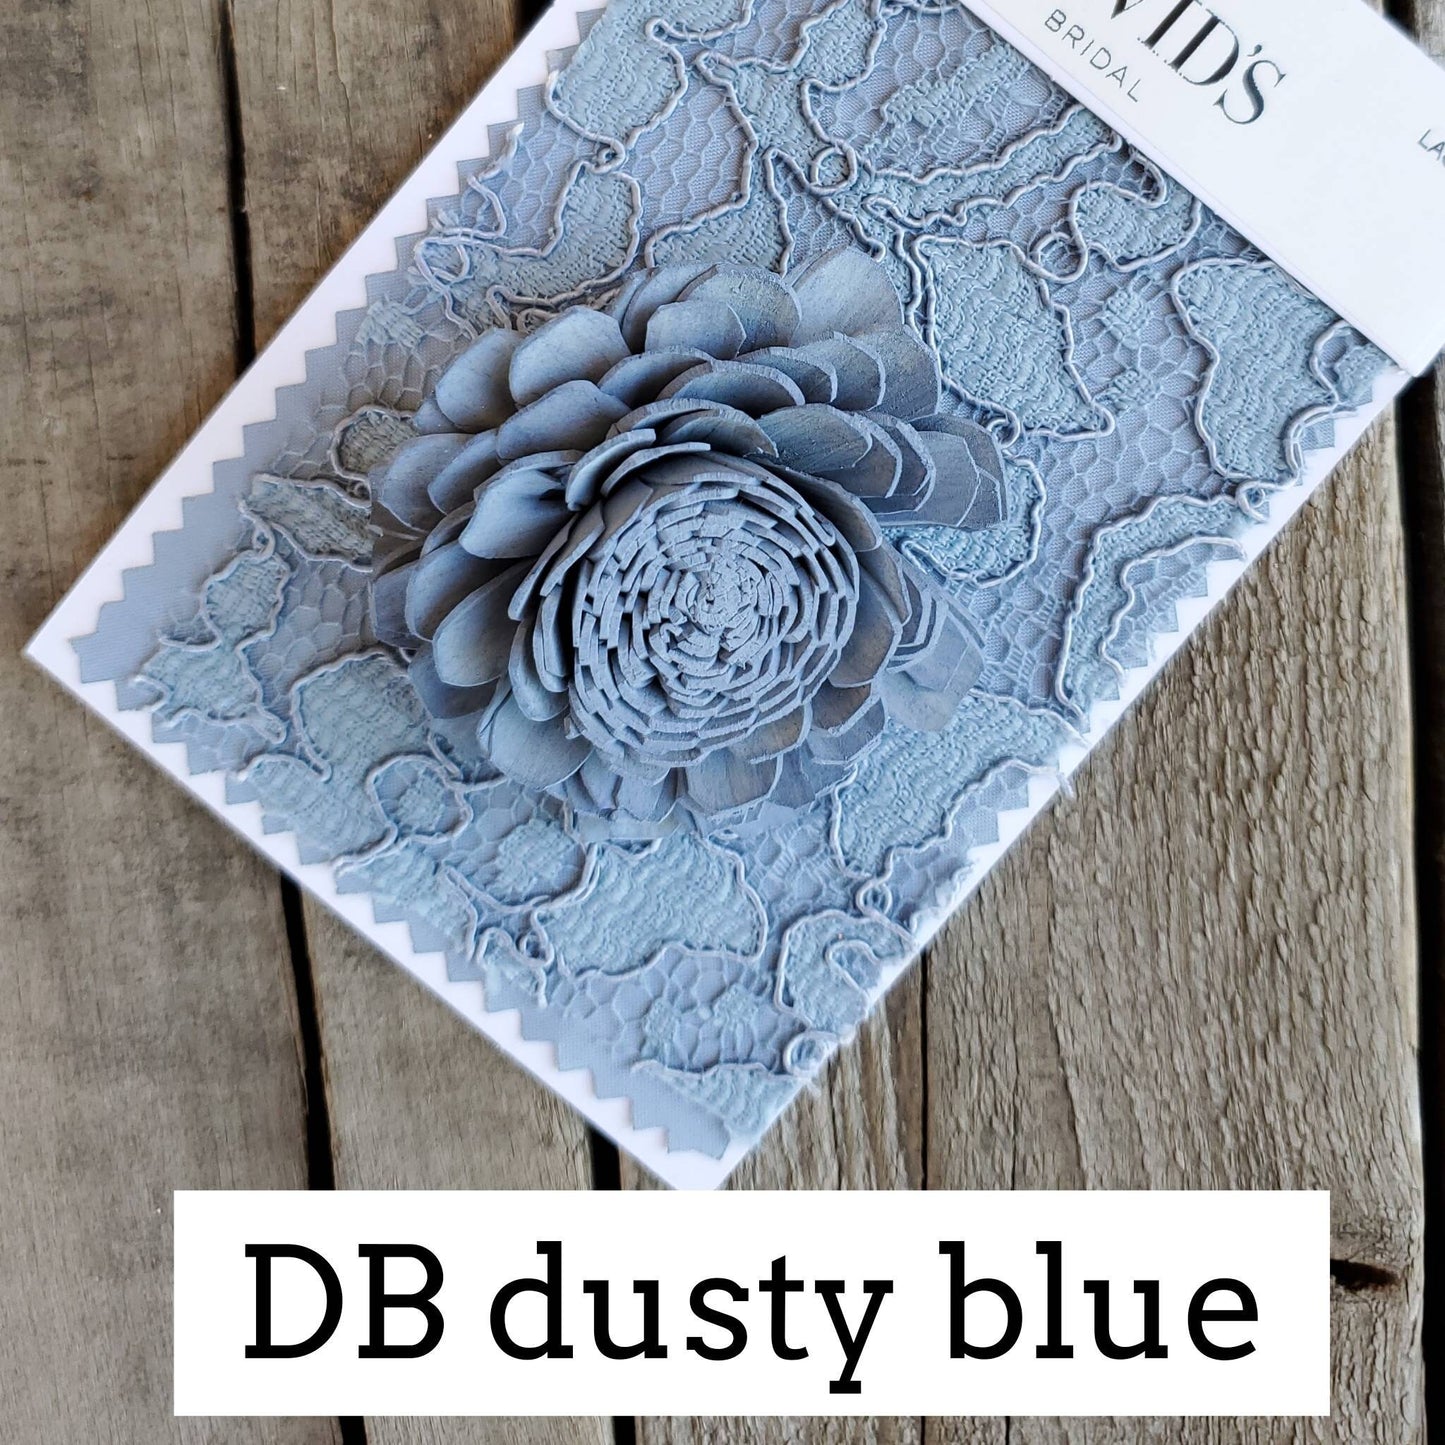 Dusty Blue Sola Wood Flower Wedding Bouquet: Dusty Blue, Bark, and Cream Wood Flowers for Bride